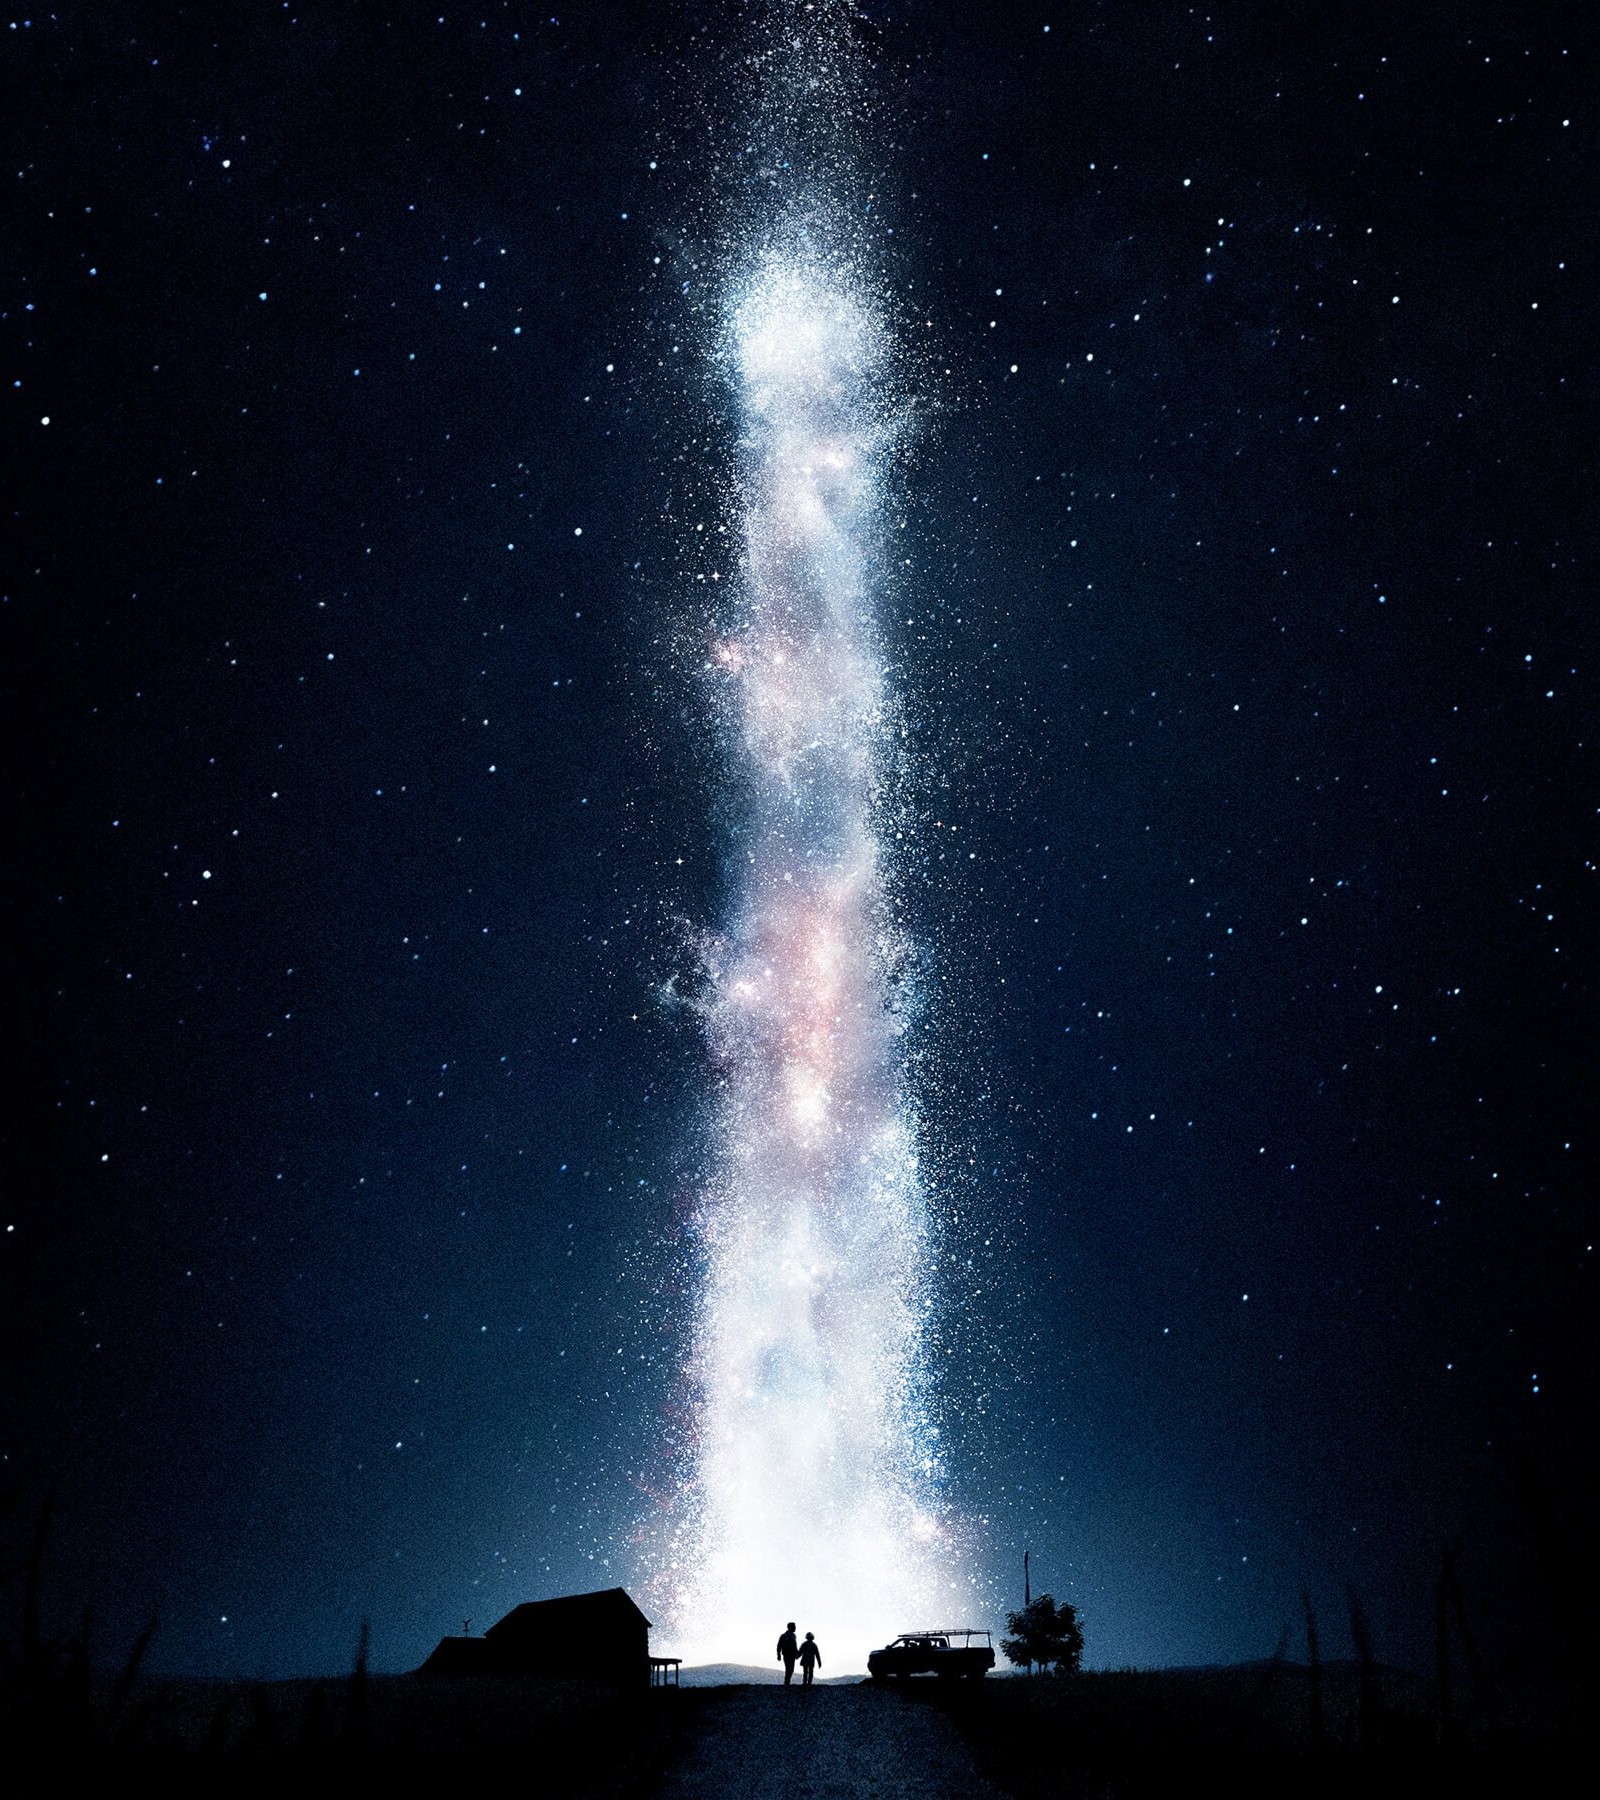 Interstellar (2014) Wallpaper for Amazon Kindle Fire HDX 8.9